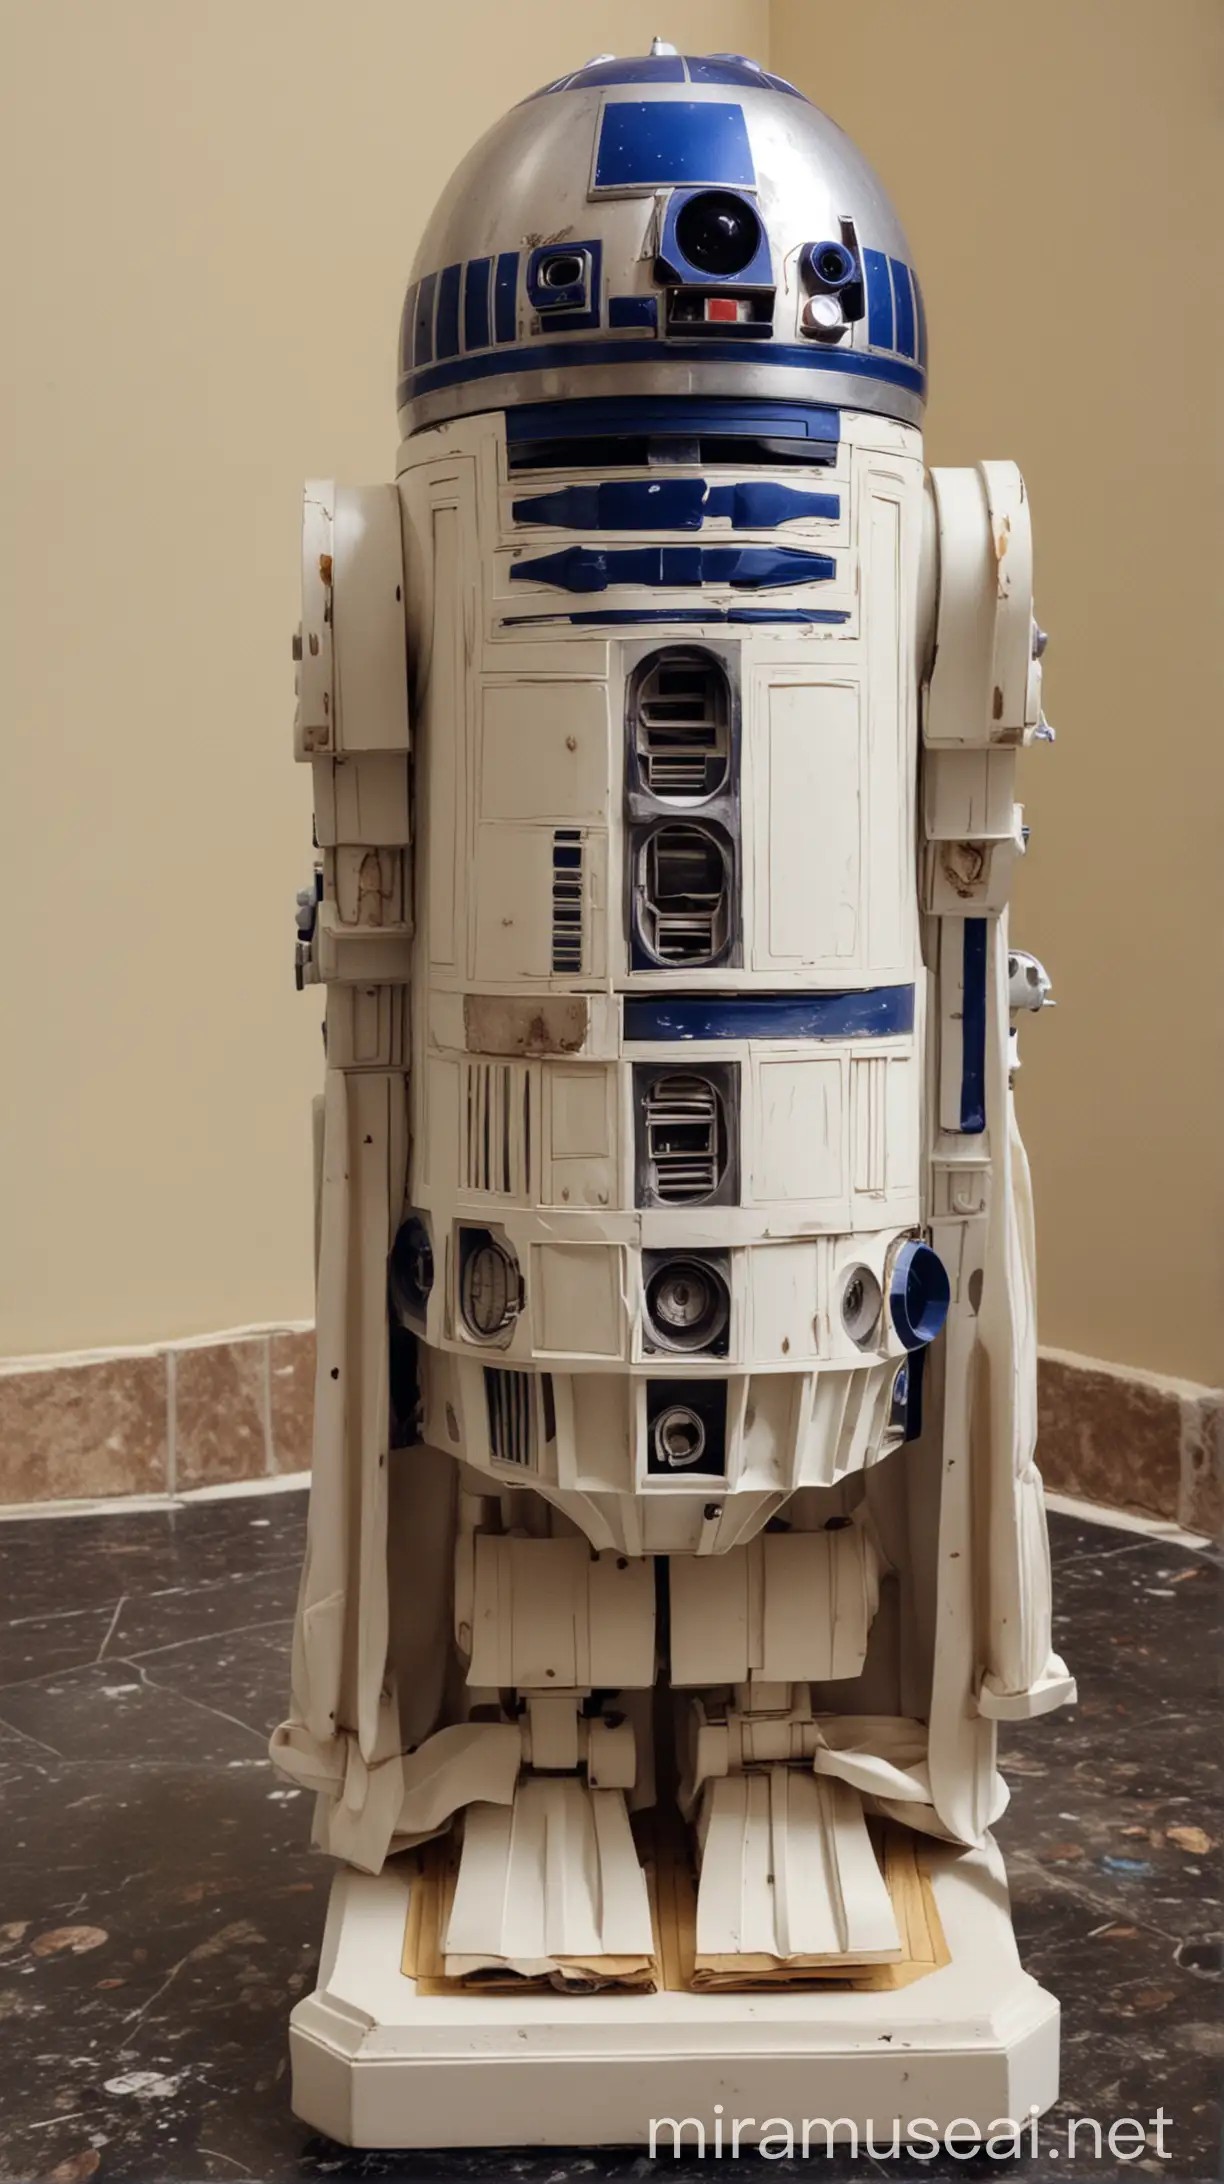 R2-D2 as a Catholic saint.